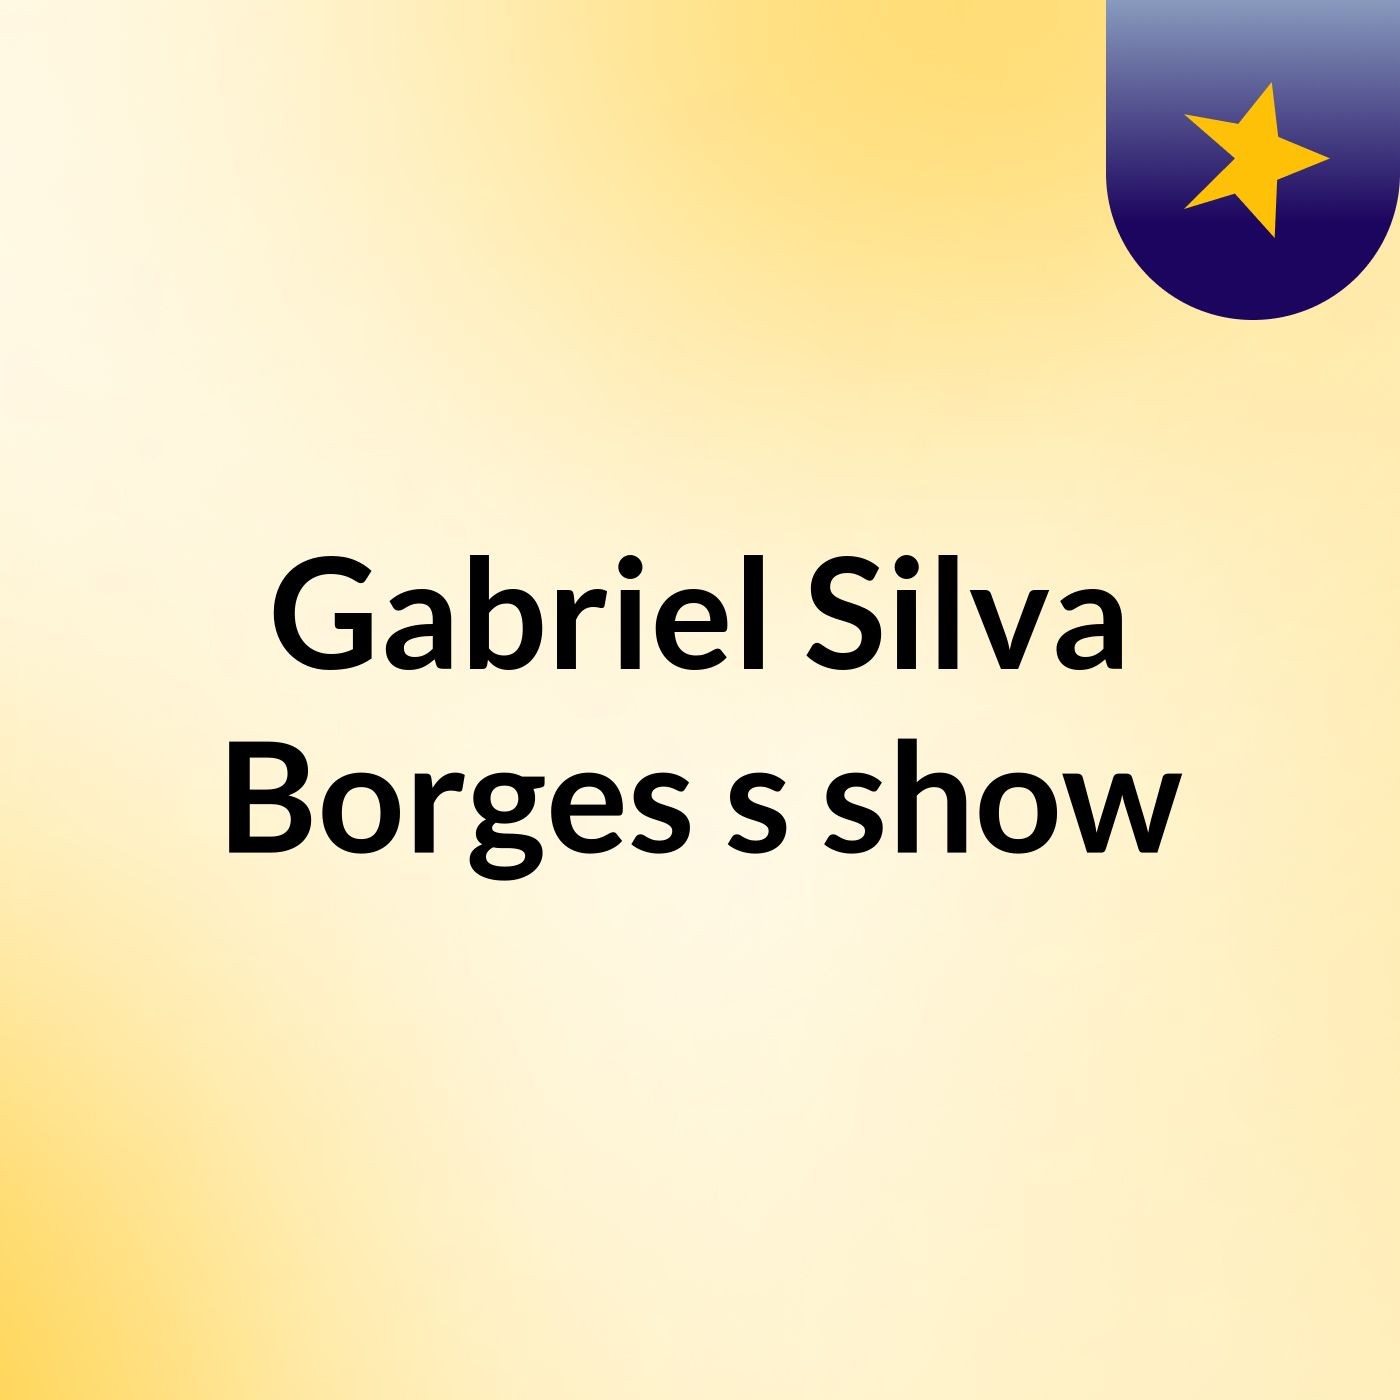 Gabriel Silva Borges's show